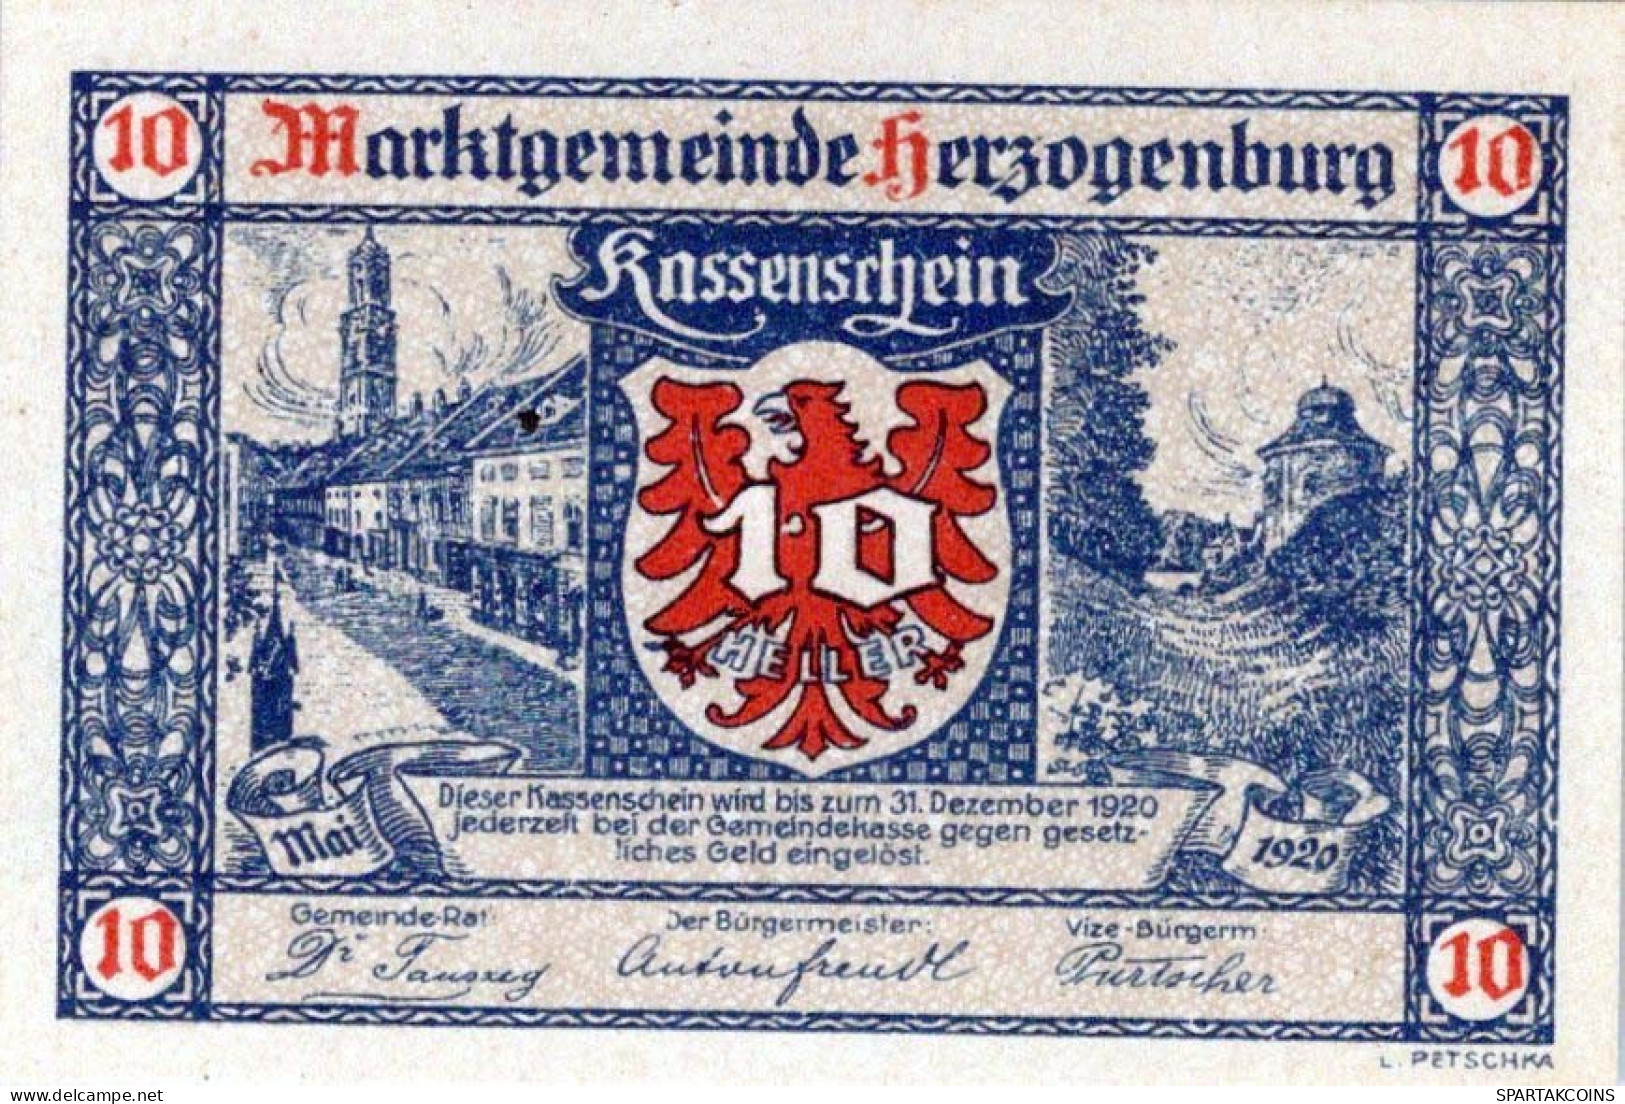 10 HELLER 1920 Stadt HERZOGENBURG Niedrigeren Österreich Notgeld Papiergeld Banknote #PG610 - [11] Lokale Uitgaven